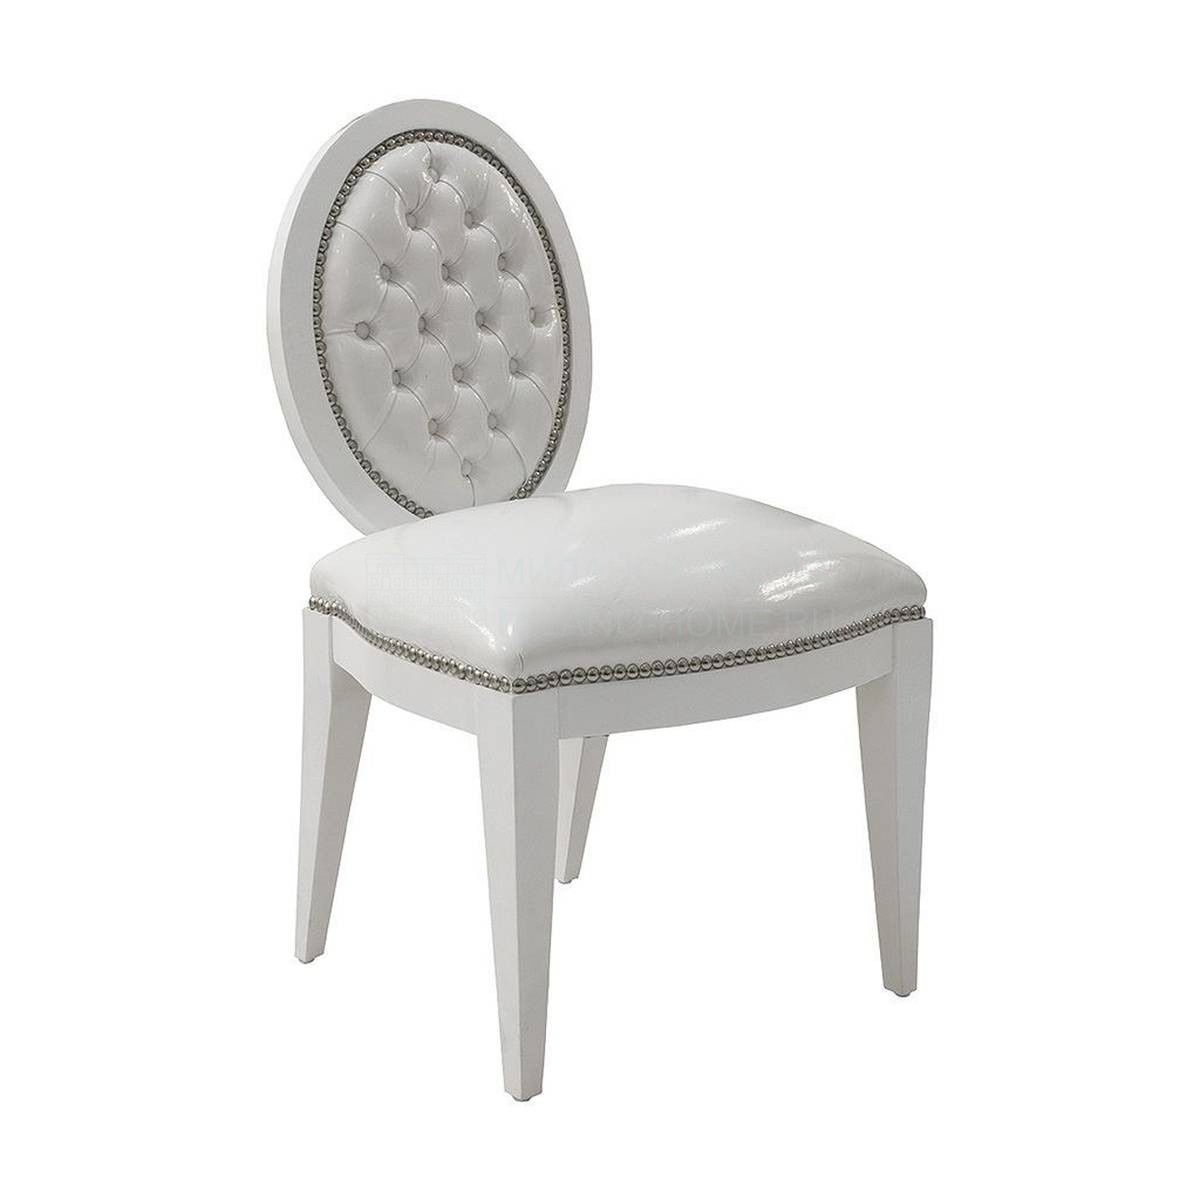 Кожаный стул M-33422 chair из Испании фабрики GUADARTE